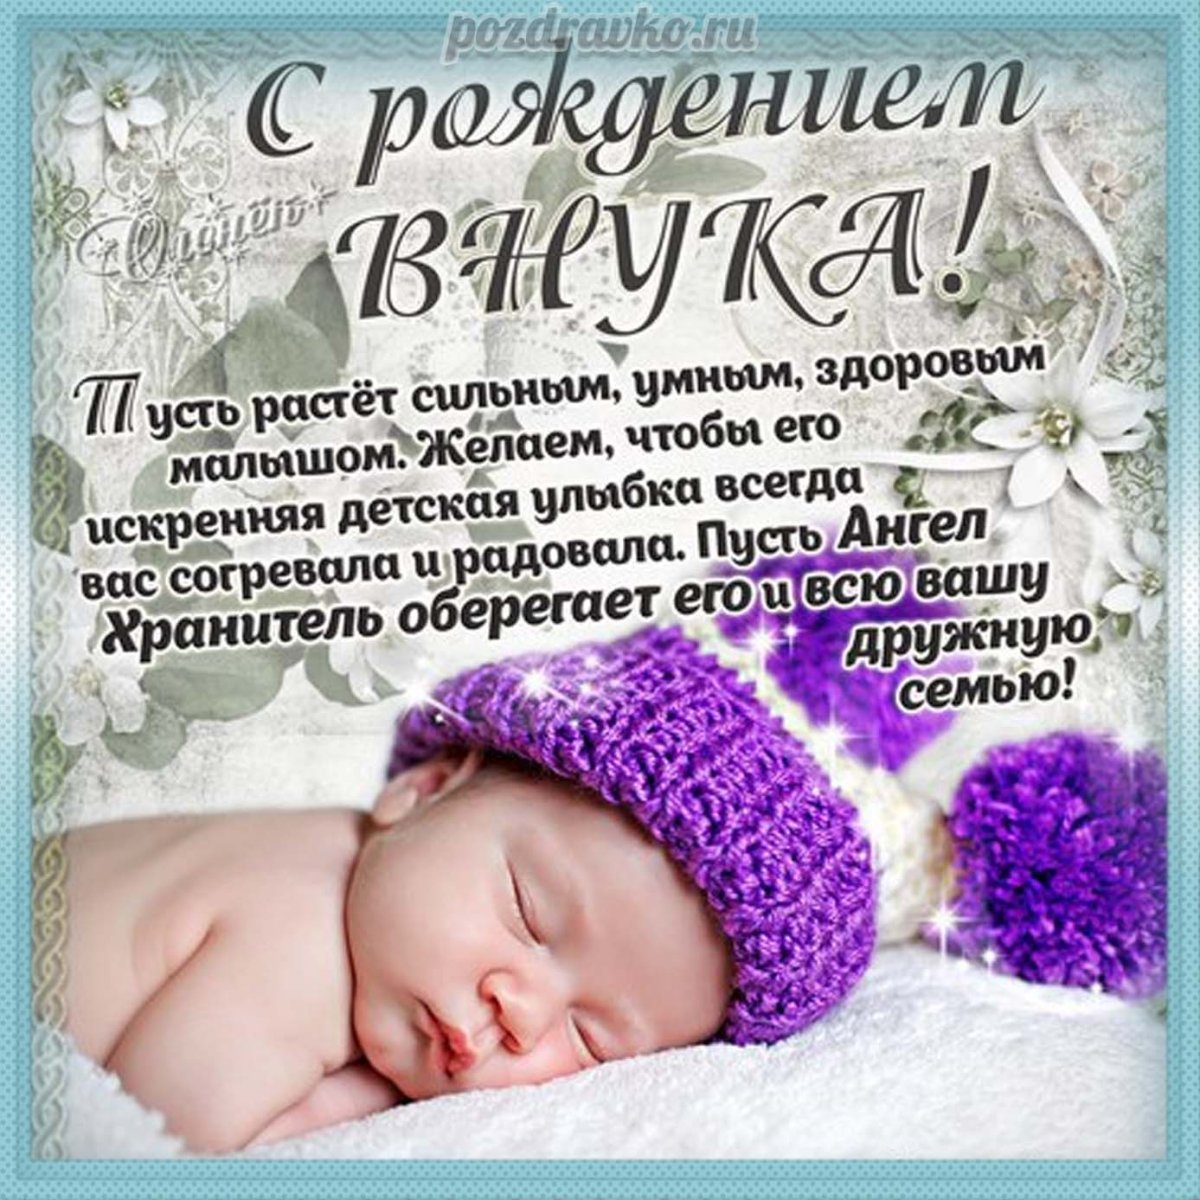 Баланы қырқынан шығару (40 дней ребенку со дня рождения) – традиции казахского народа